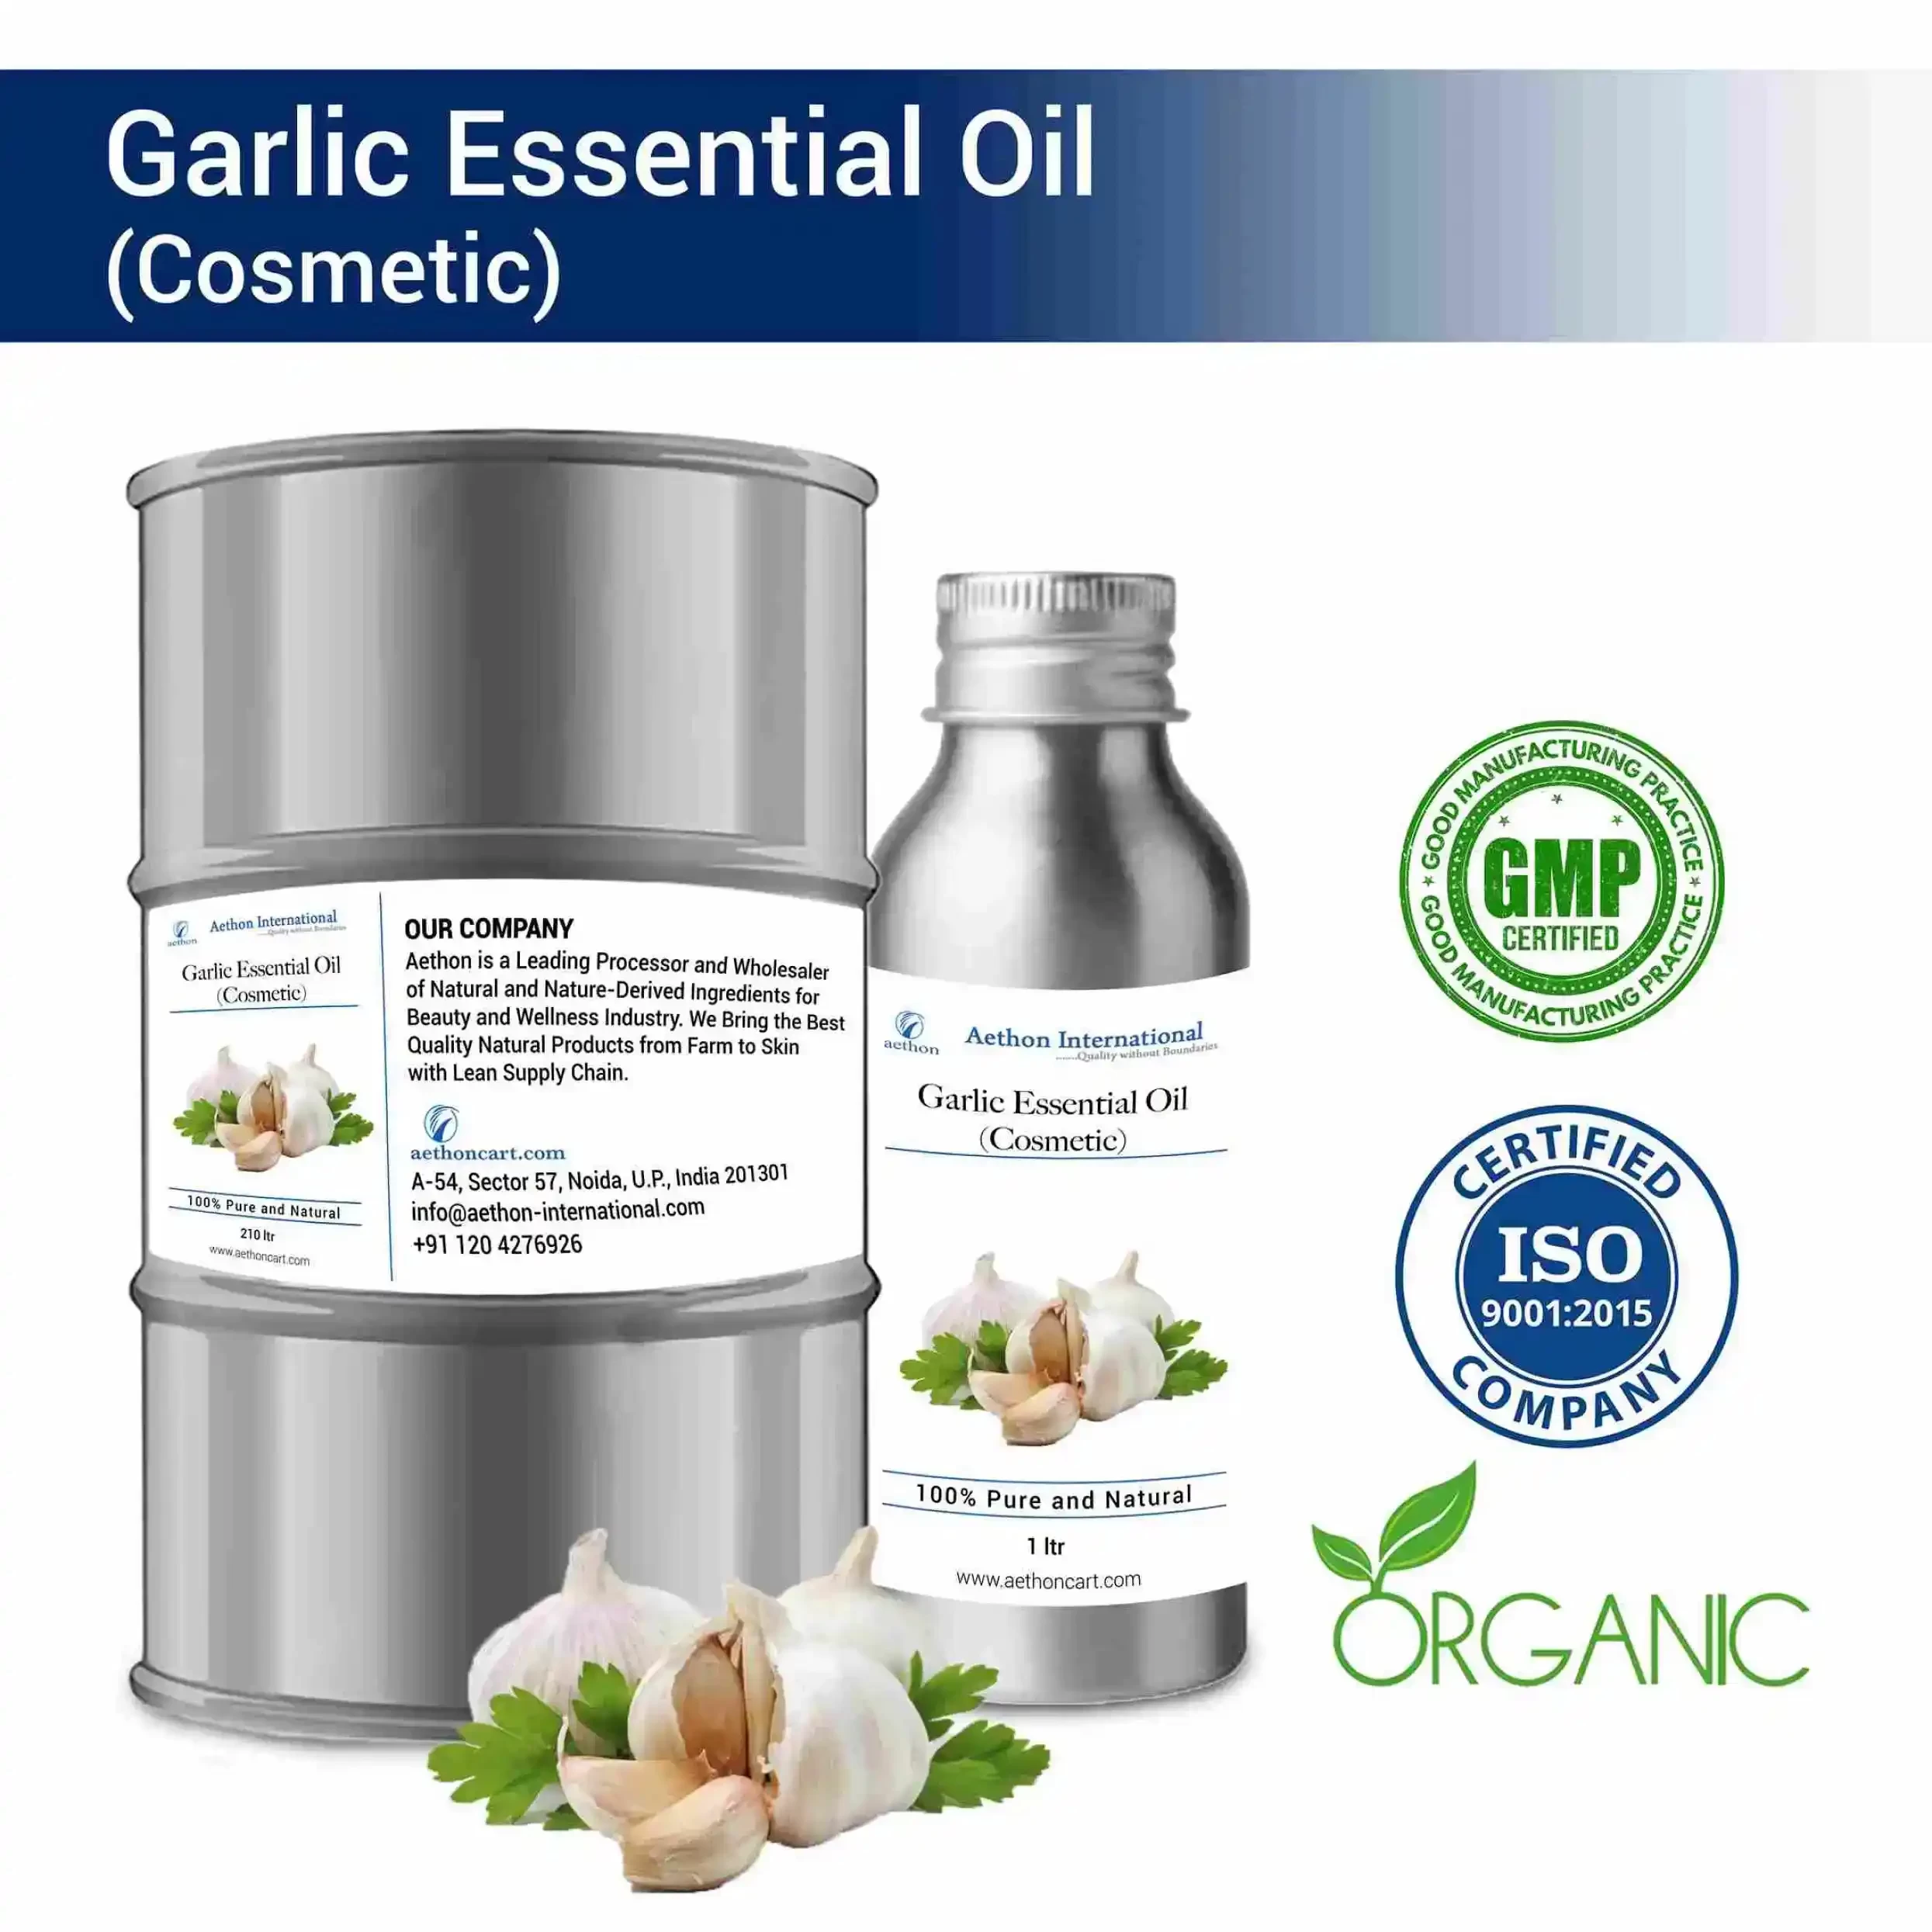 Garlic Essential Oil (Cosmetic)